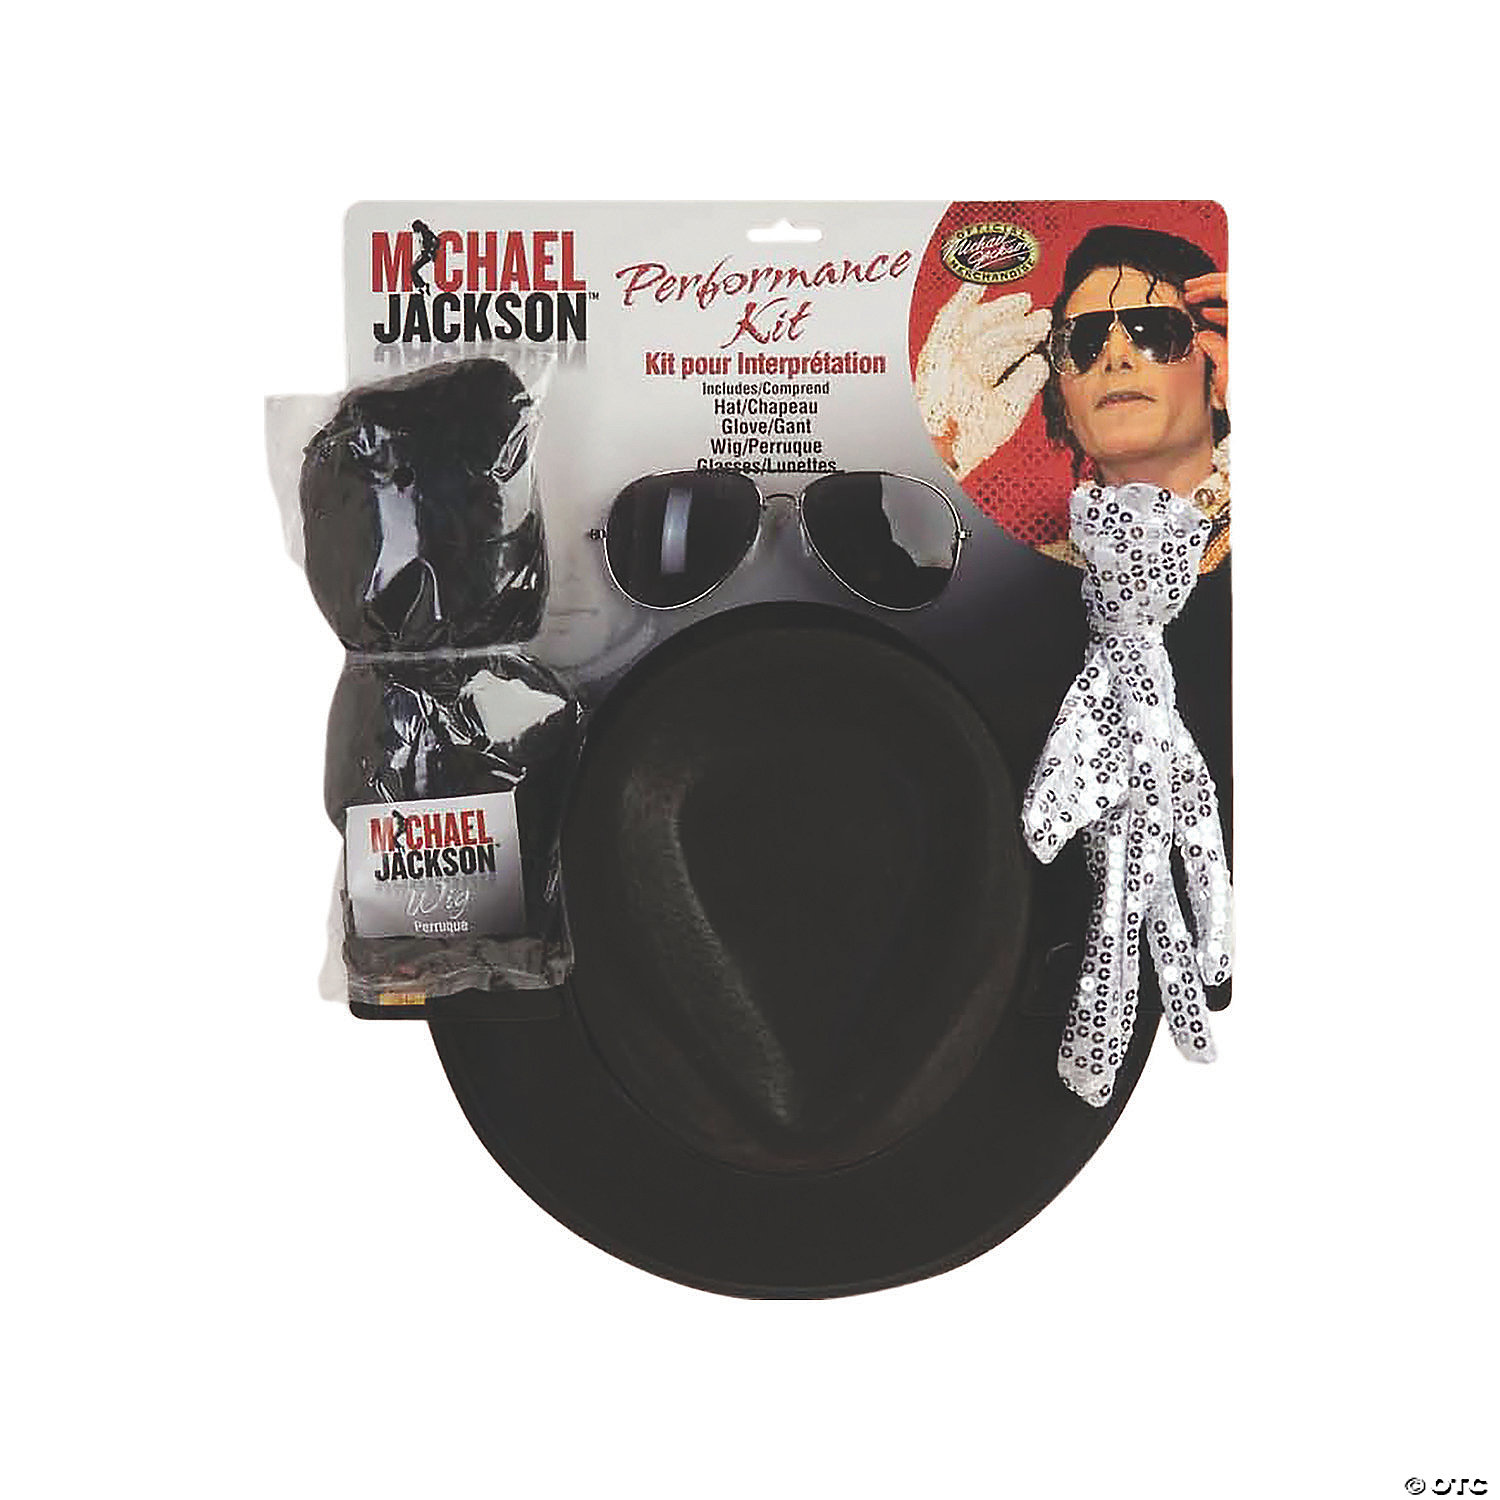 Michael Jackson Costume Guide and Merchandises 